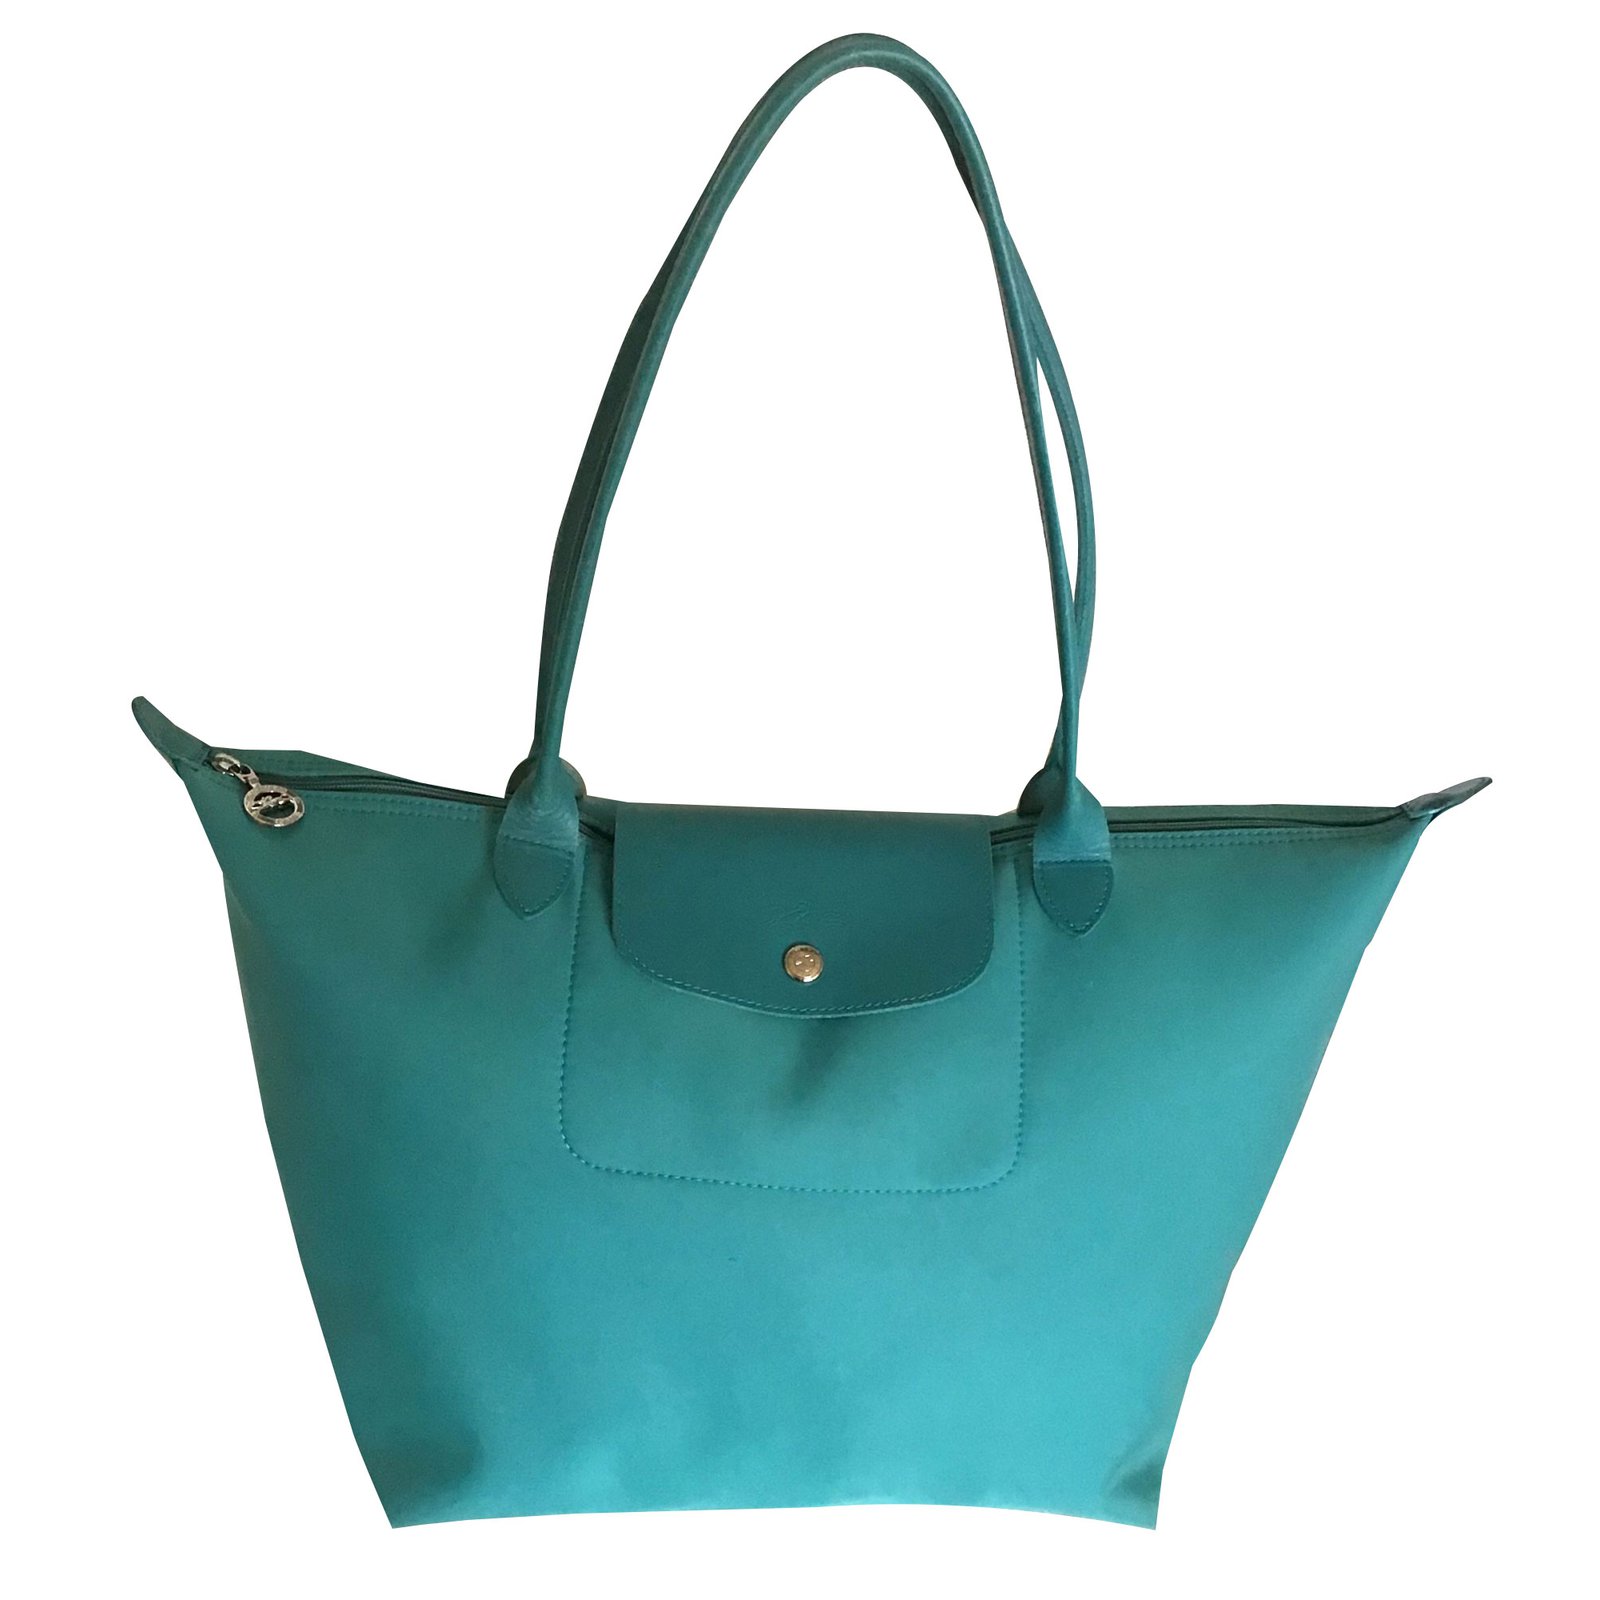 longchamp turquoise bag